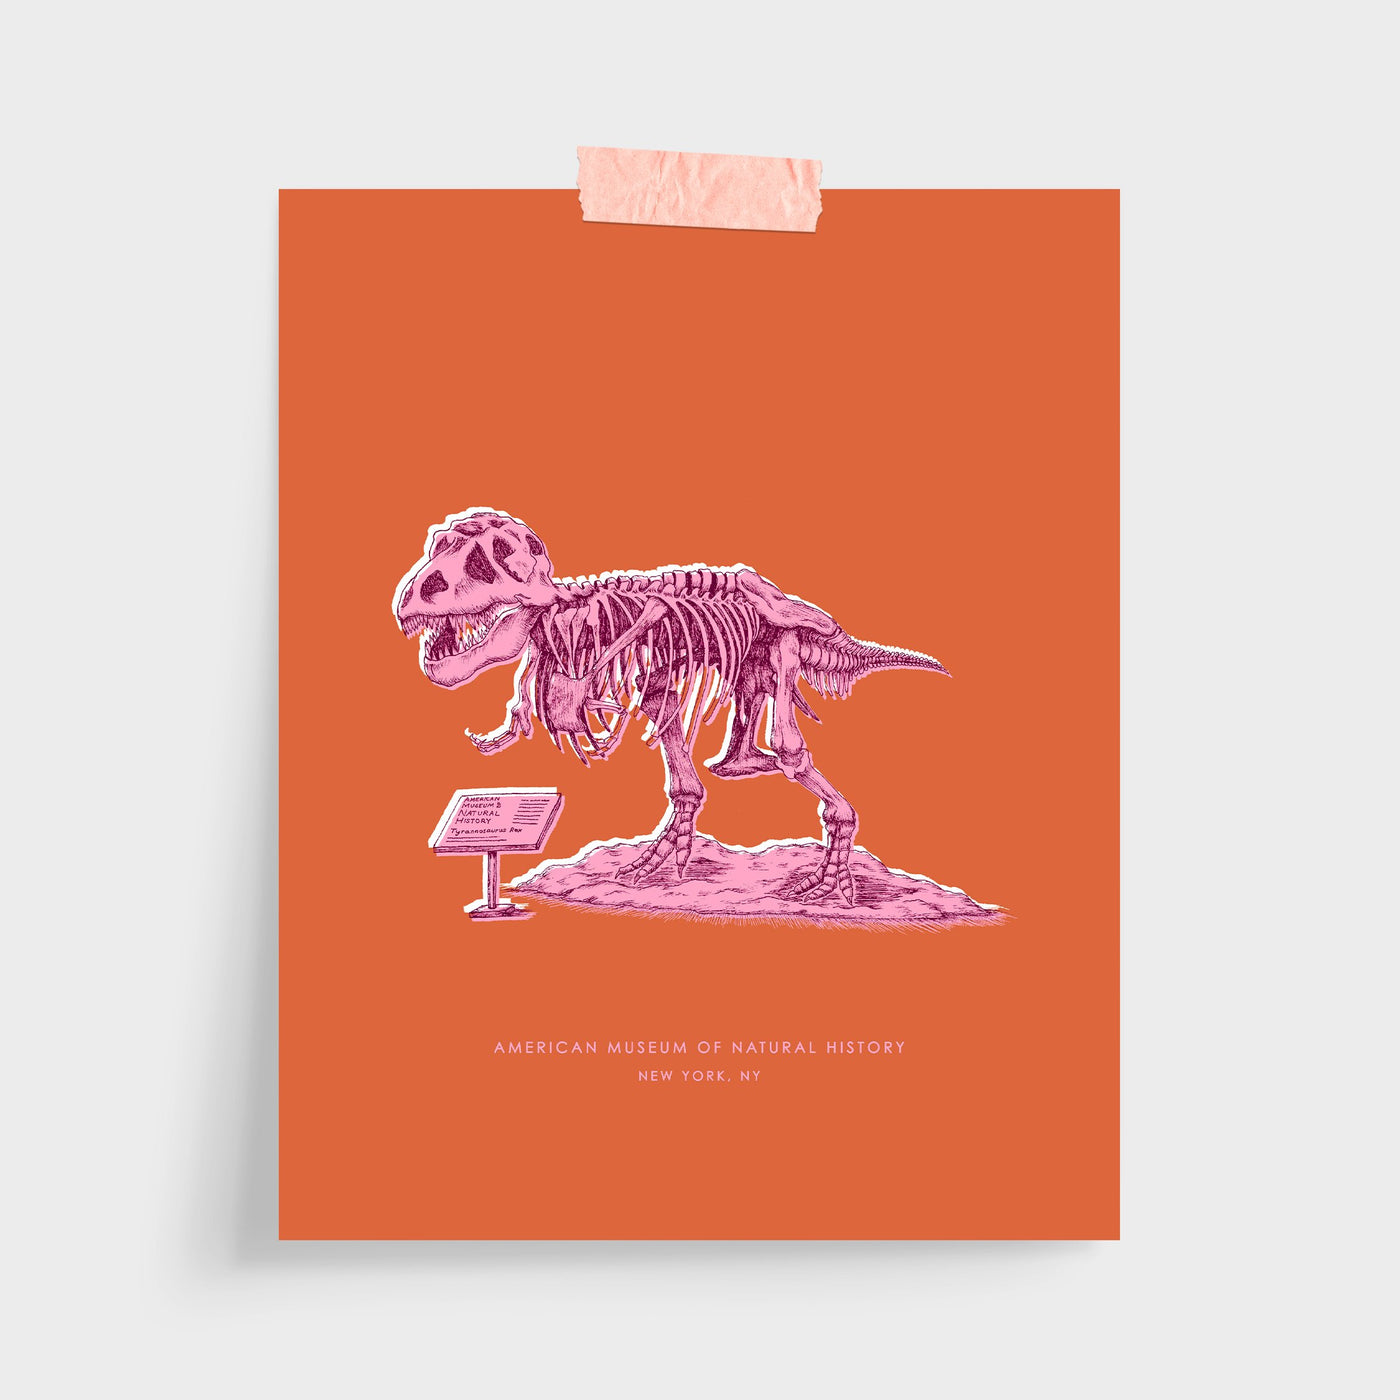 Gallery Prints Orange Print / 5x7 / Unframed New York Dinosaur Print dombezalergii